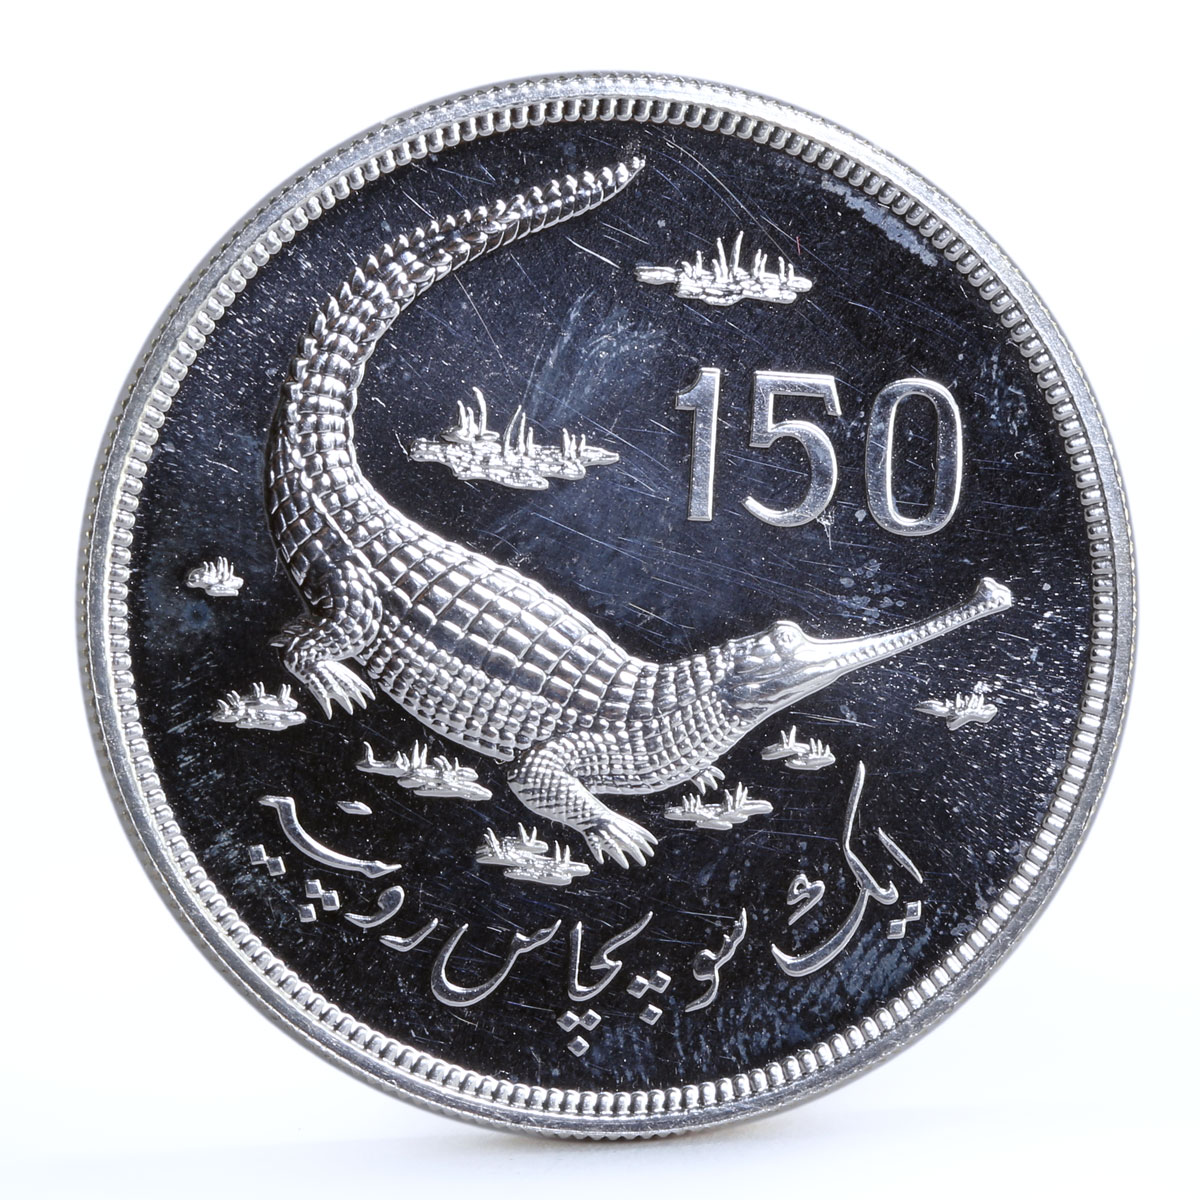 Pakistan 150 rupees WWF series Gavial Crocodile proof silver coin 1976